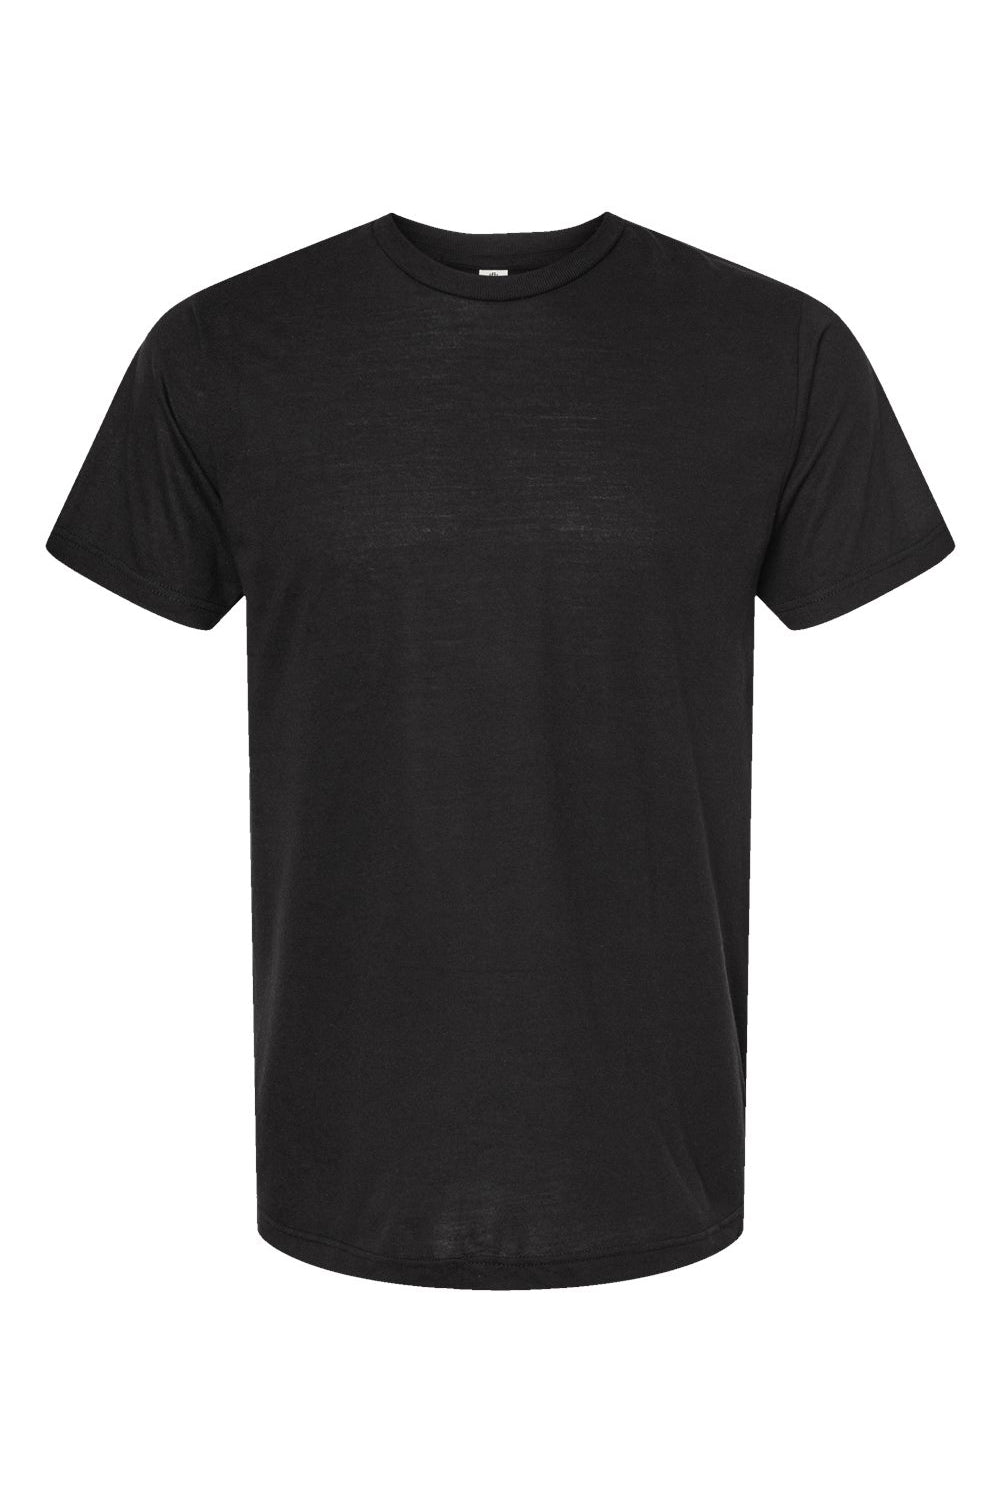 Tultex 254 Mens Short Sleeve Crewneck T-Shirt Black Flat Front